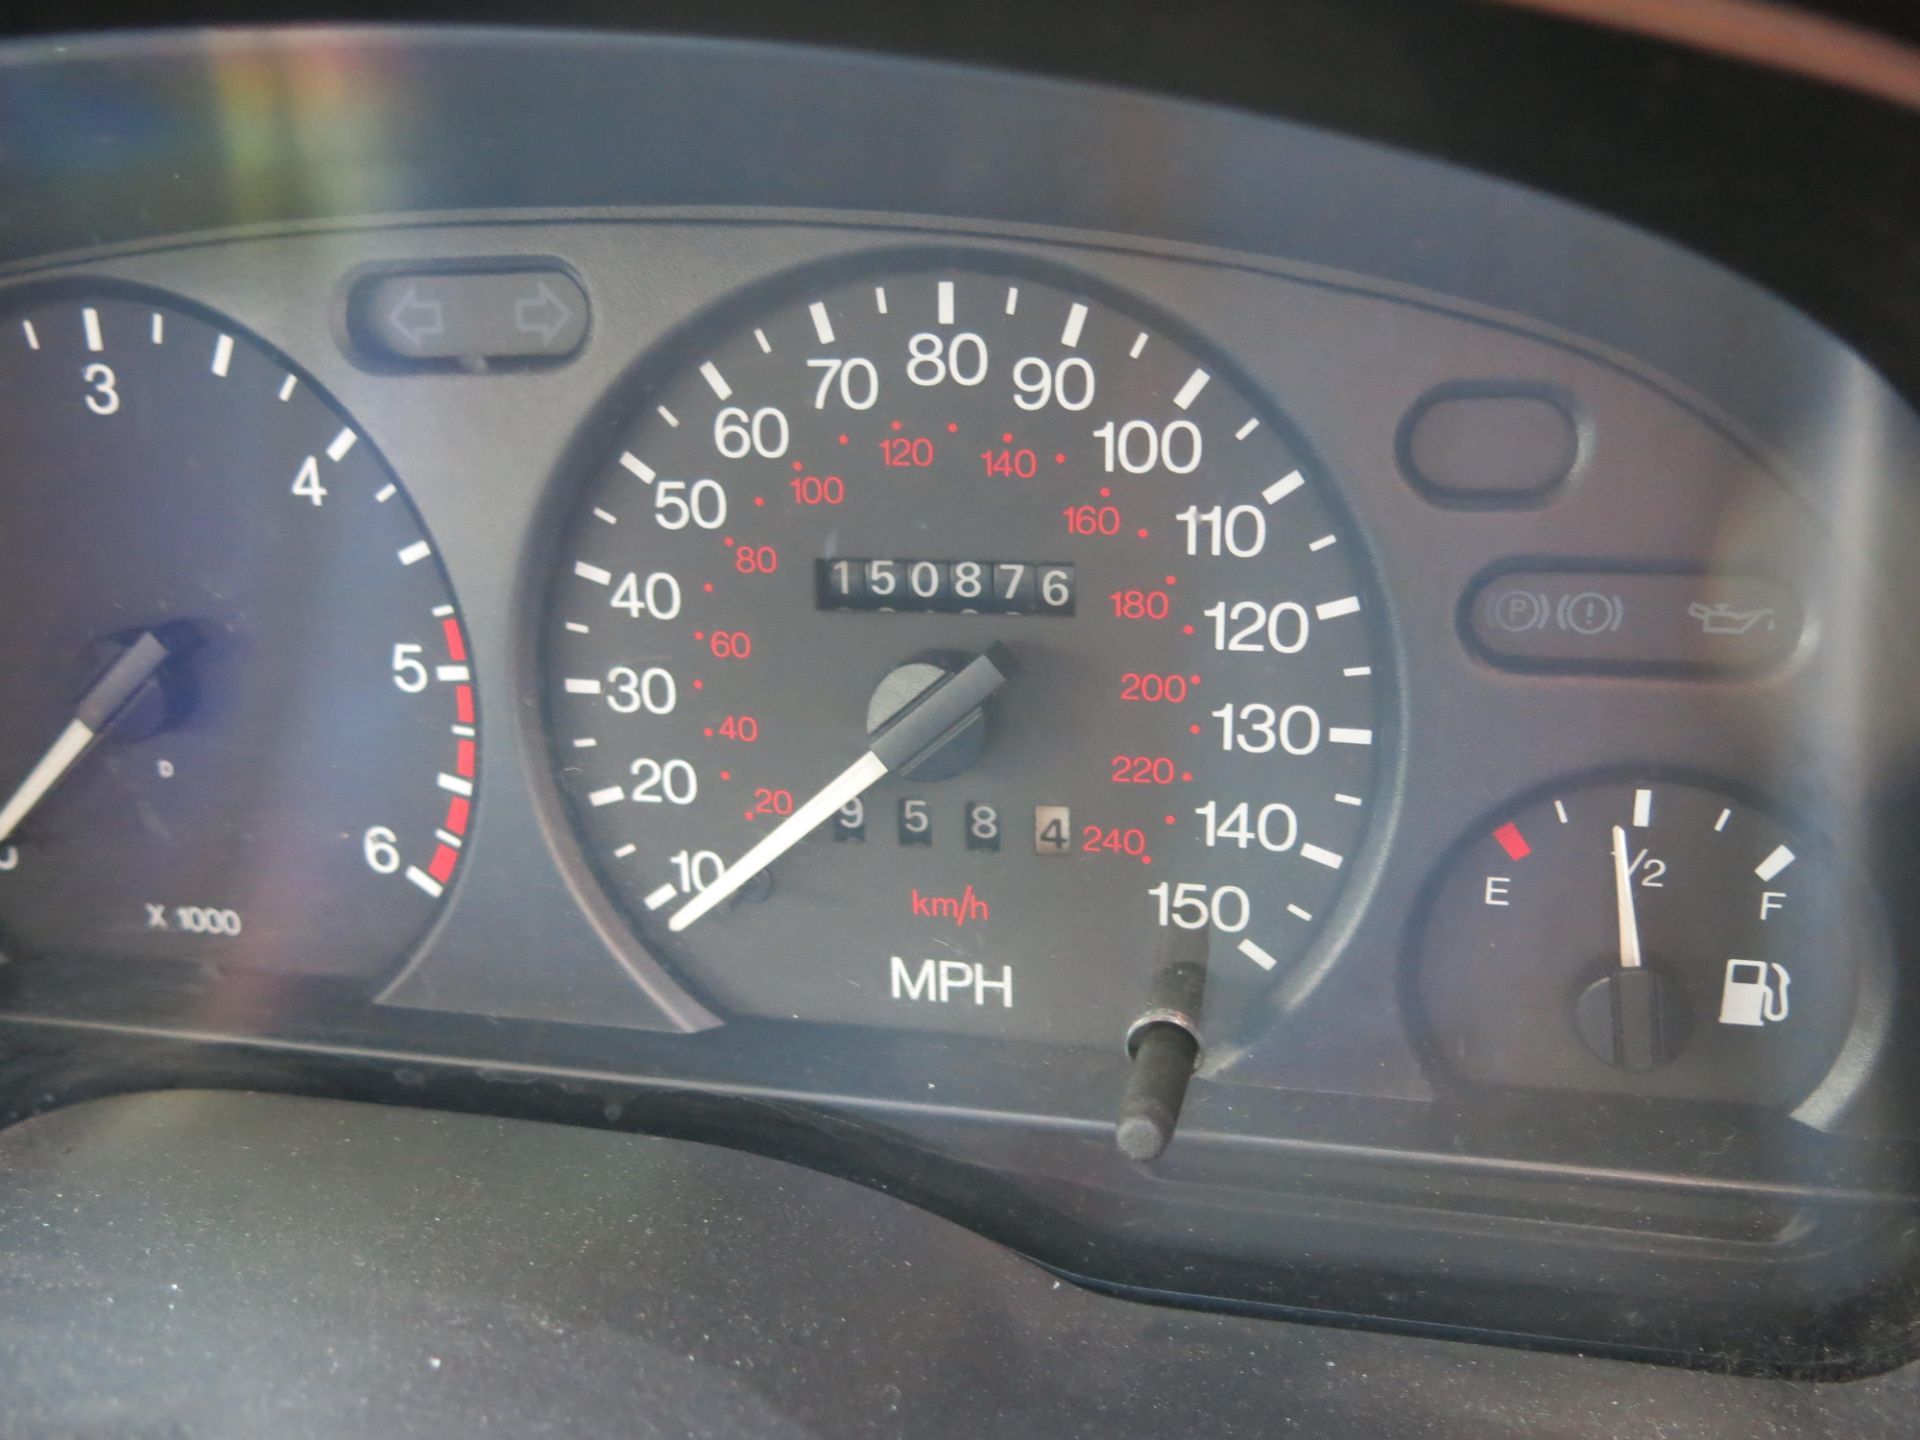 1995 Ford Mondeo 1.8DT GLX Estate (non-runner). Registration N431 HVF. Odometer reads 150876. - Image 5 of 6